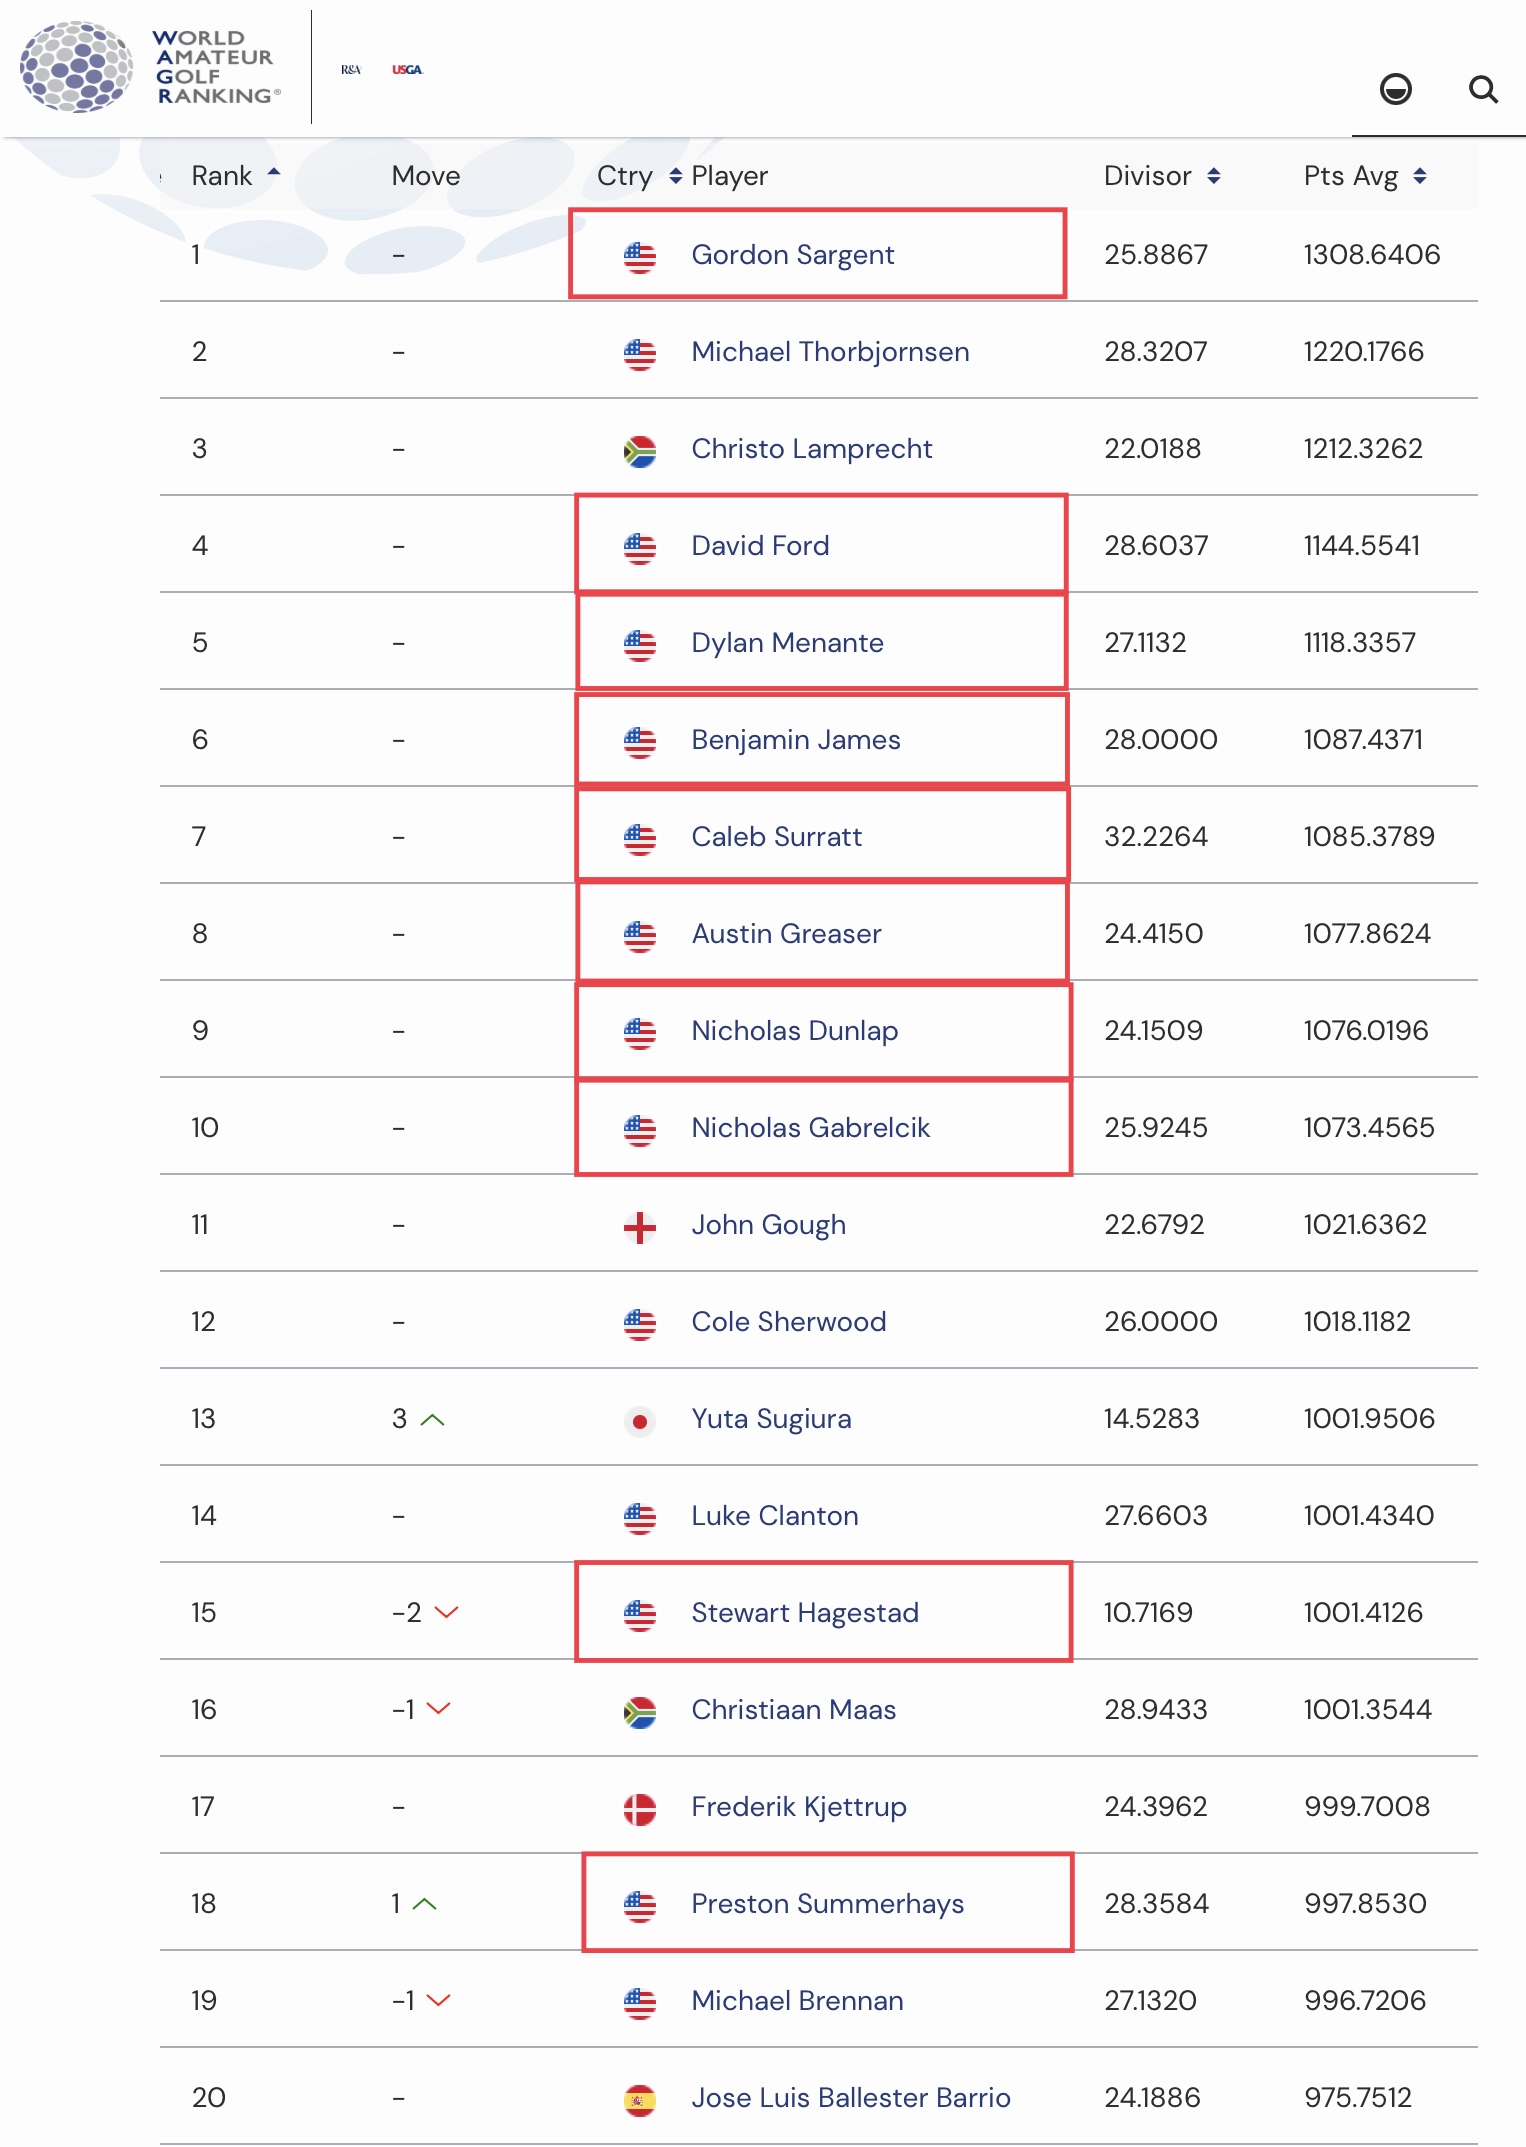 World Amateur Golf Ranking (WAGR)